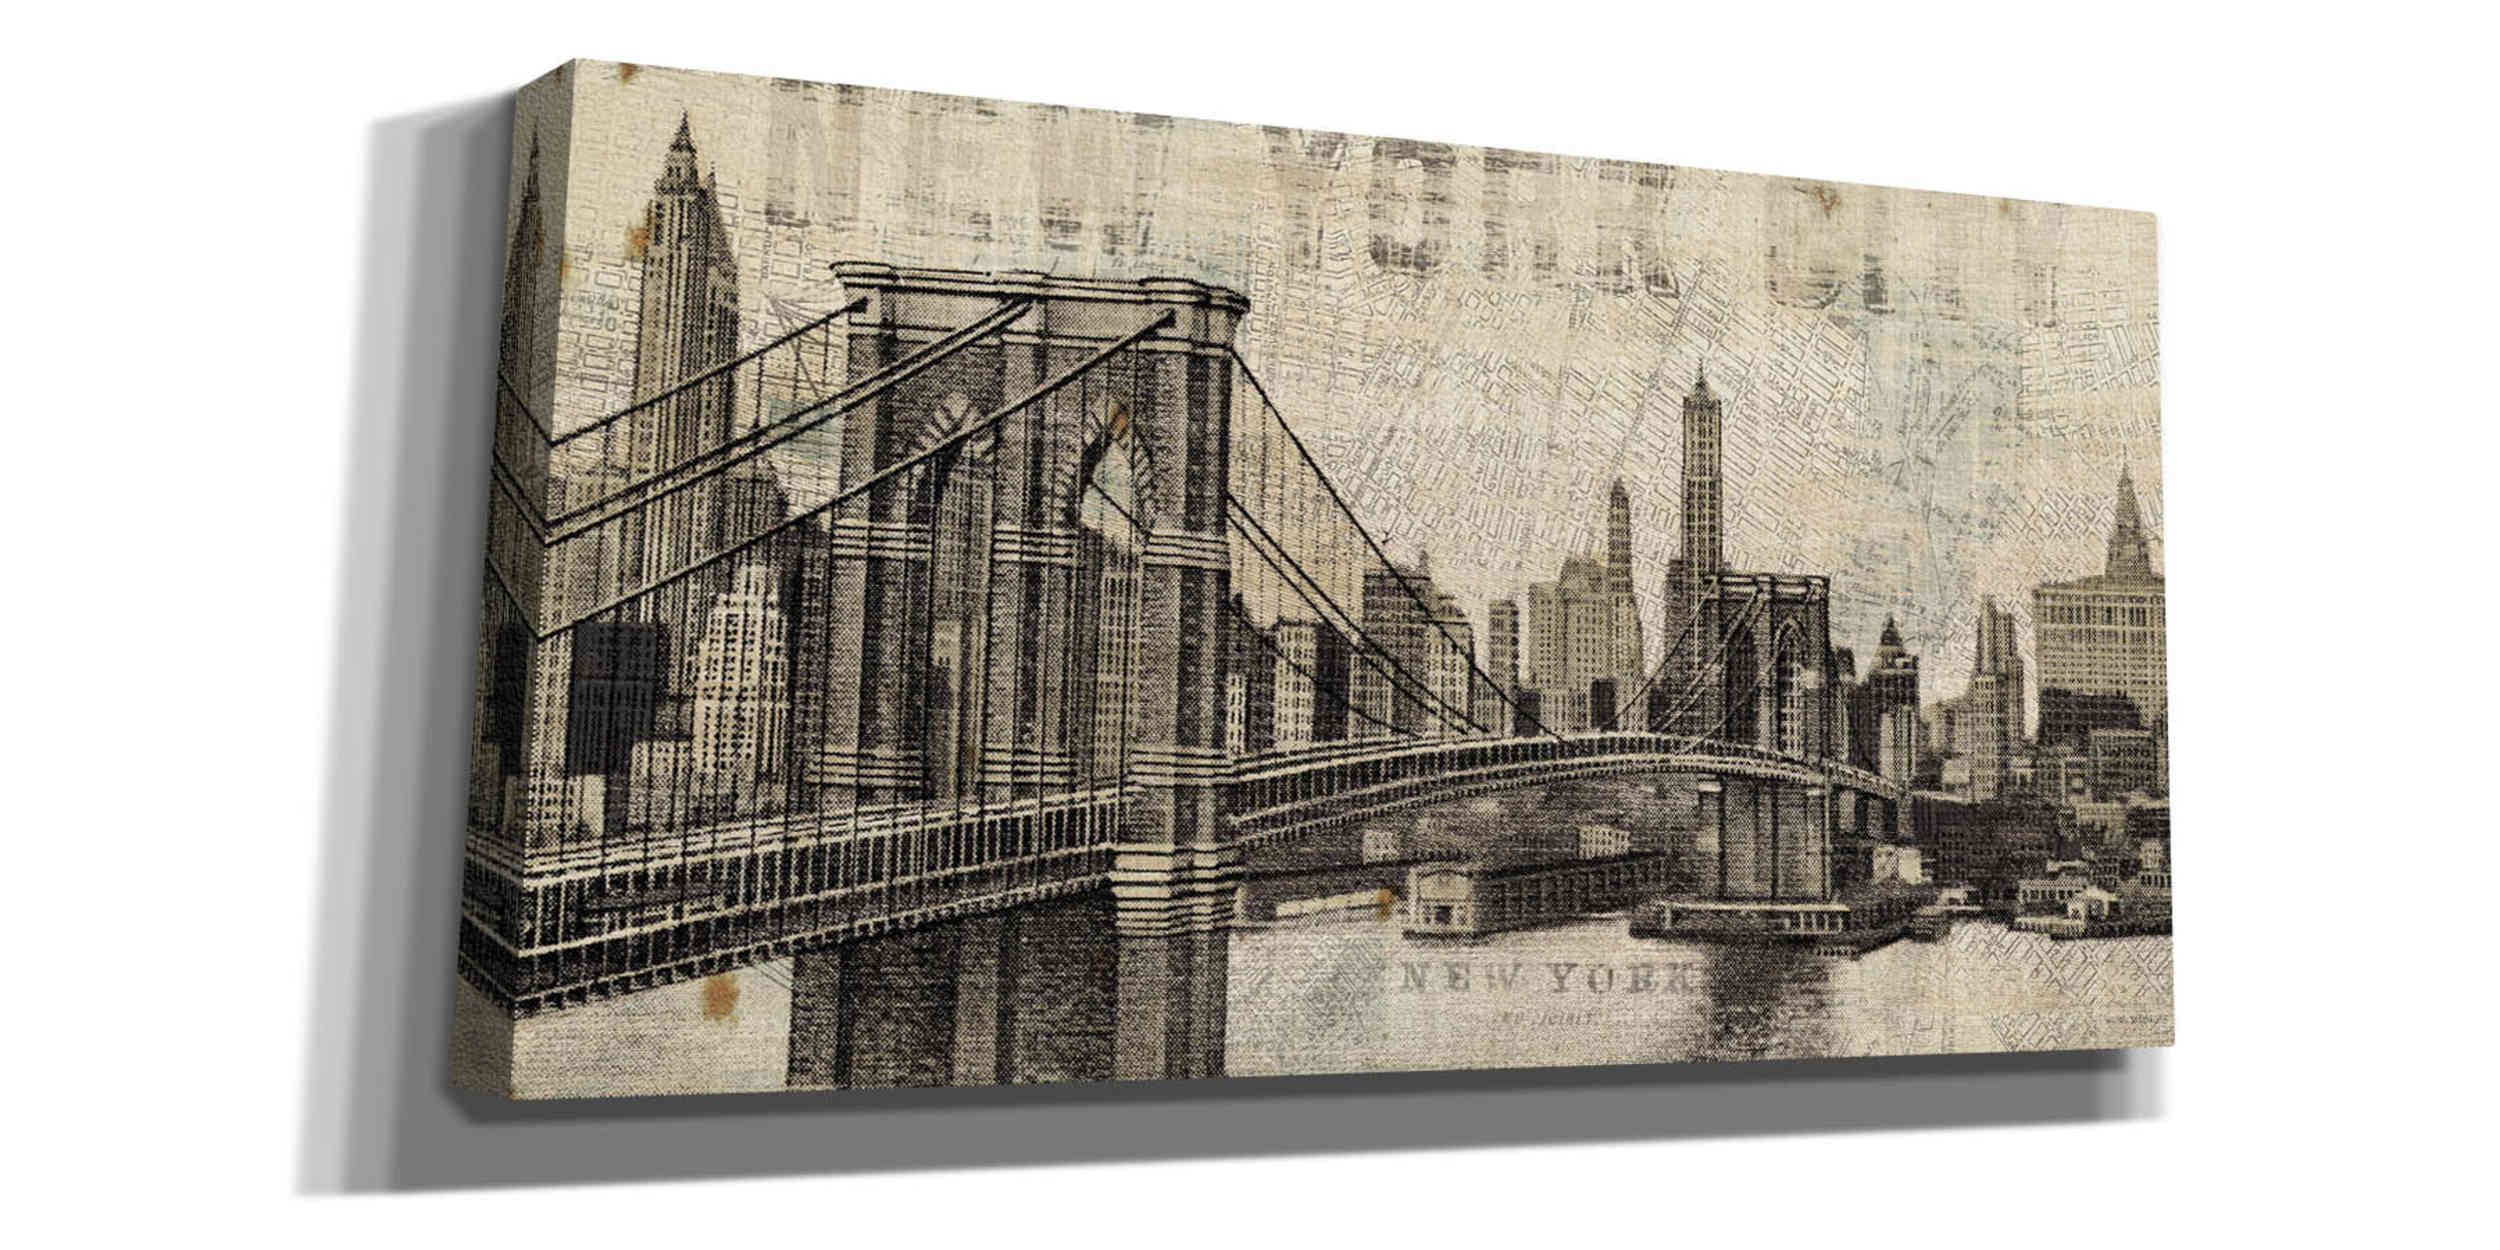 Giclee Canvas Wall Art /'Vintage NY Brooklyn Bridge/' by Michael Mullan